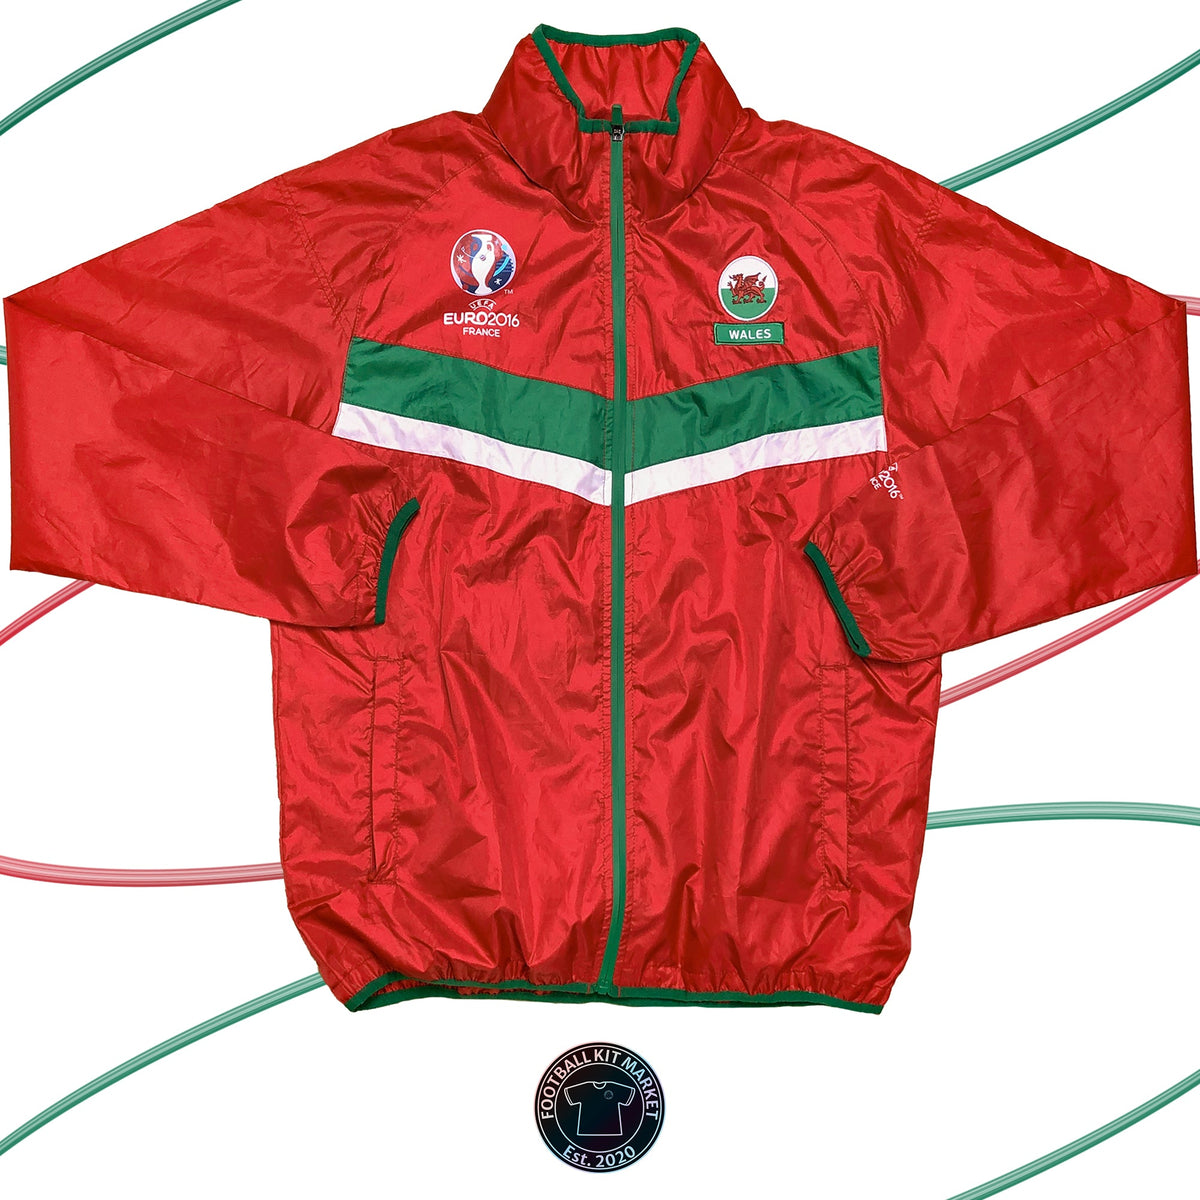 Genuine WALES Jacket (2016) - UEFA EURO 2016 (L) - Product Image from Football Kit Market